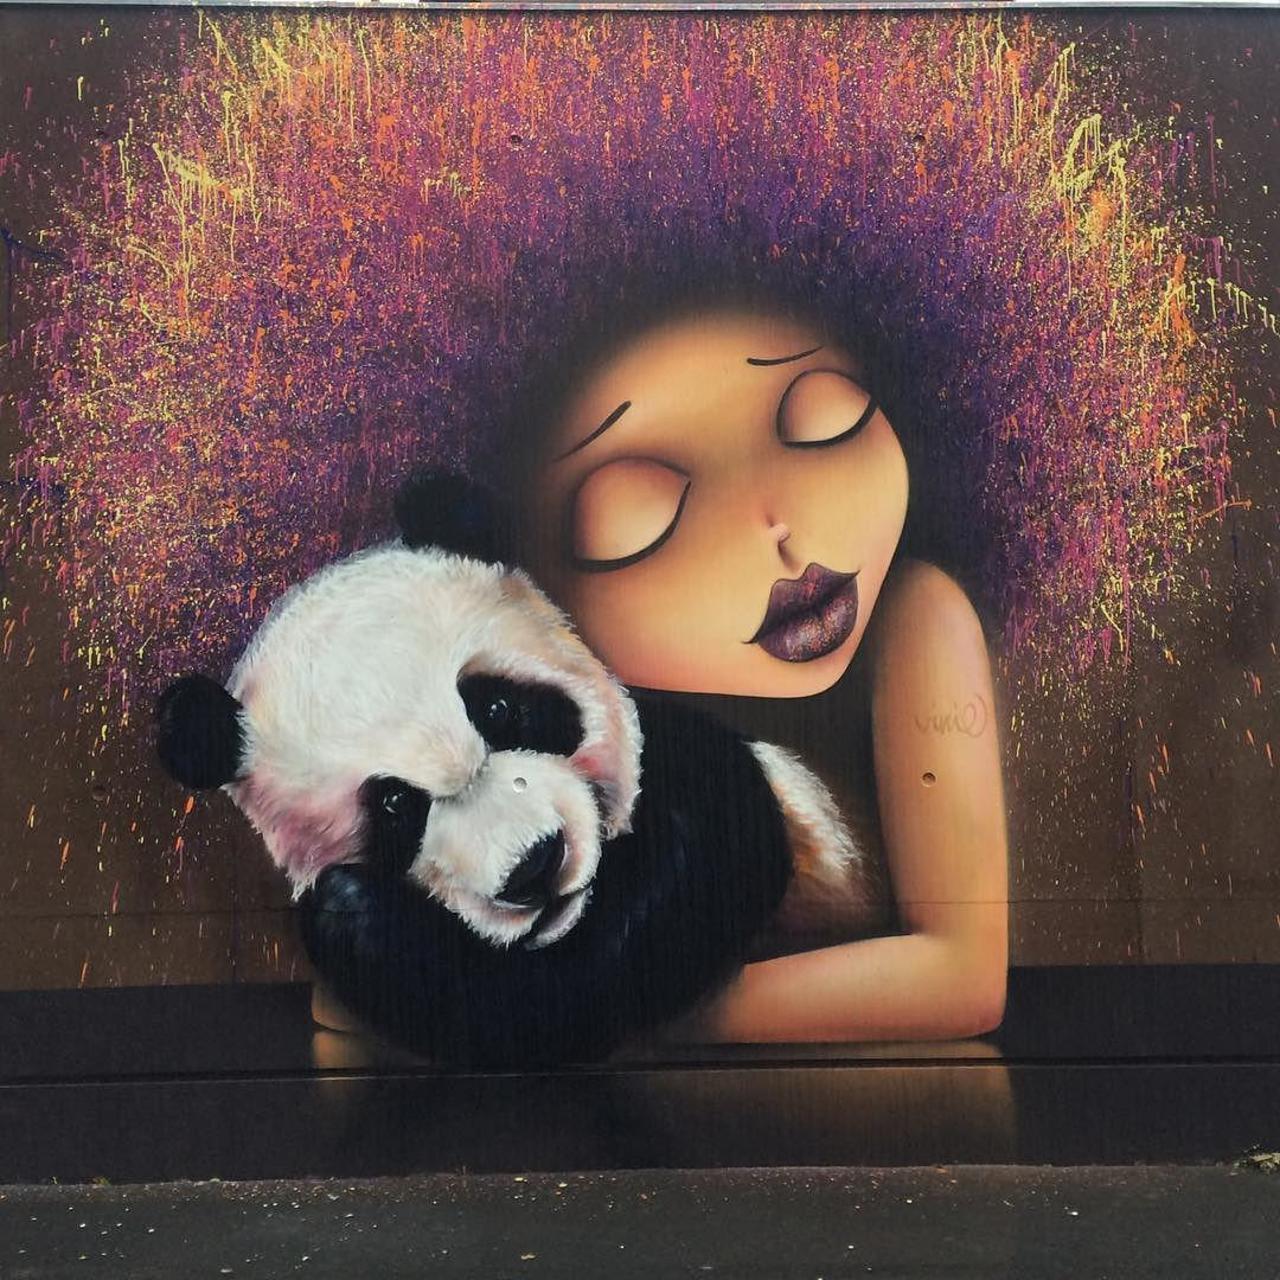 #Paris #graffiti photo by @benapix http://ift.tt/1jPXn1B #StreetArt https://t.co/debPaHOLd1